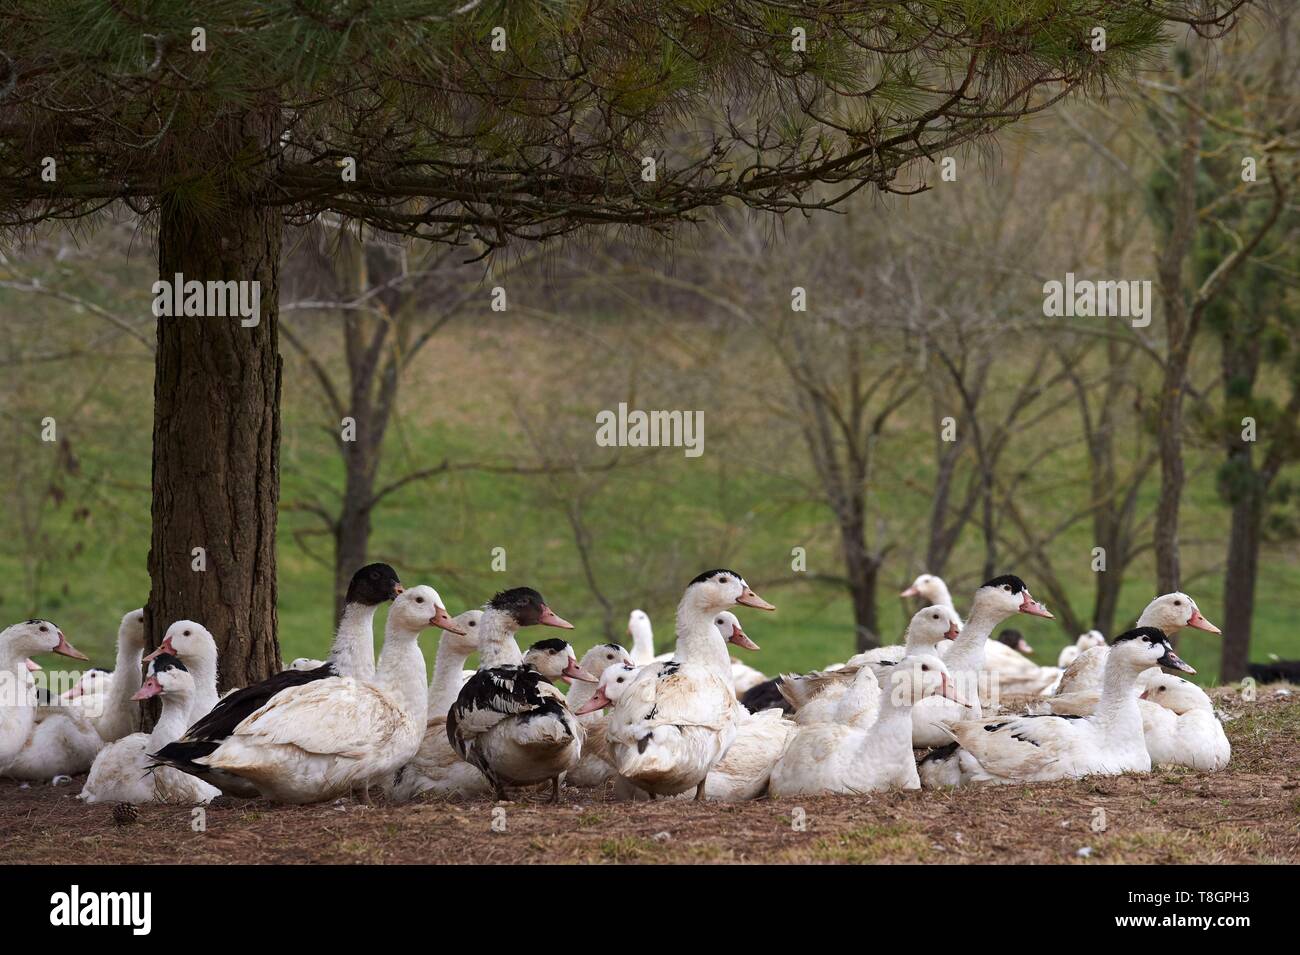 France, Gers, Lartigue, locality Baylac, Baylac farm, outdoors ducks breeding Stock Photo